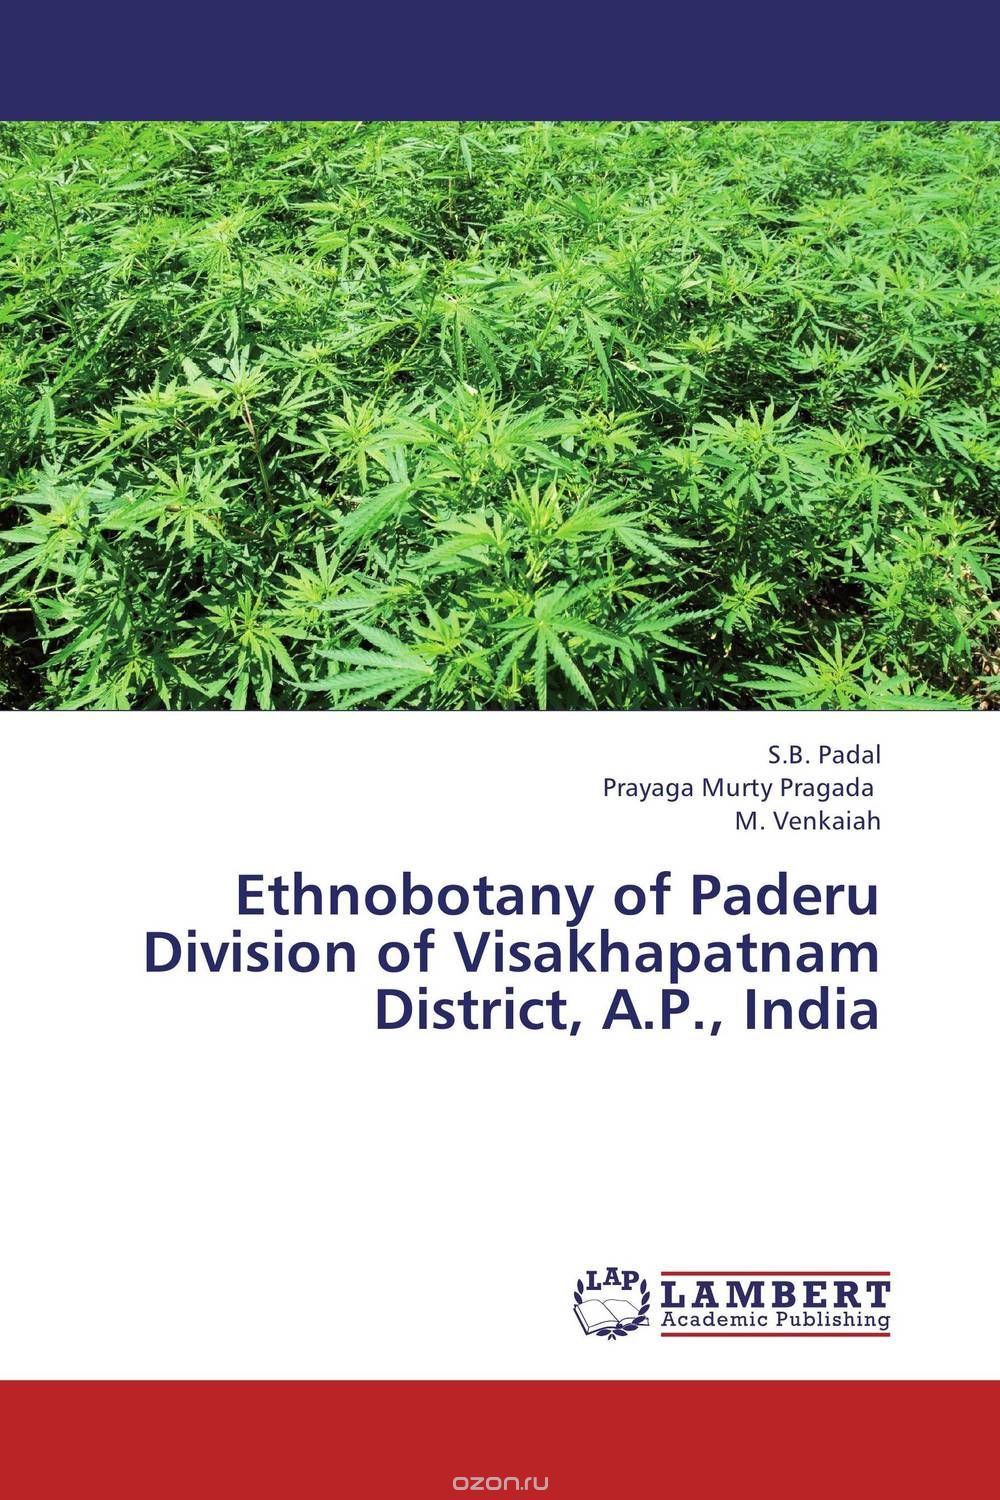 Скачать книгу "Ethnobotany of Paderu Division of Visakhapatnam District, A.P., India"